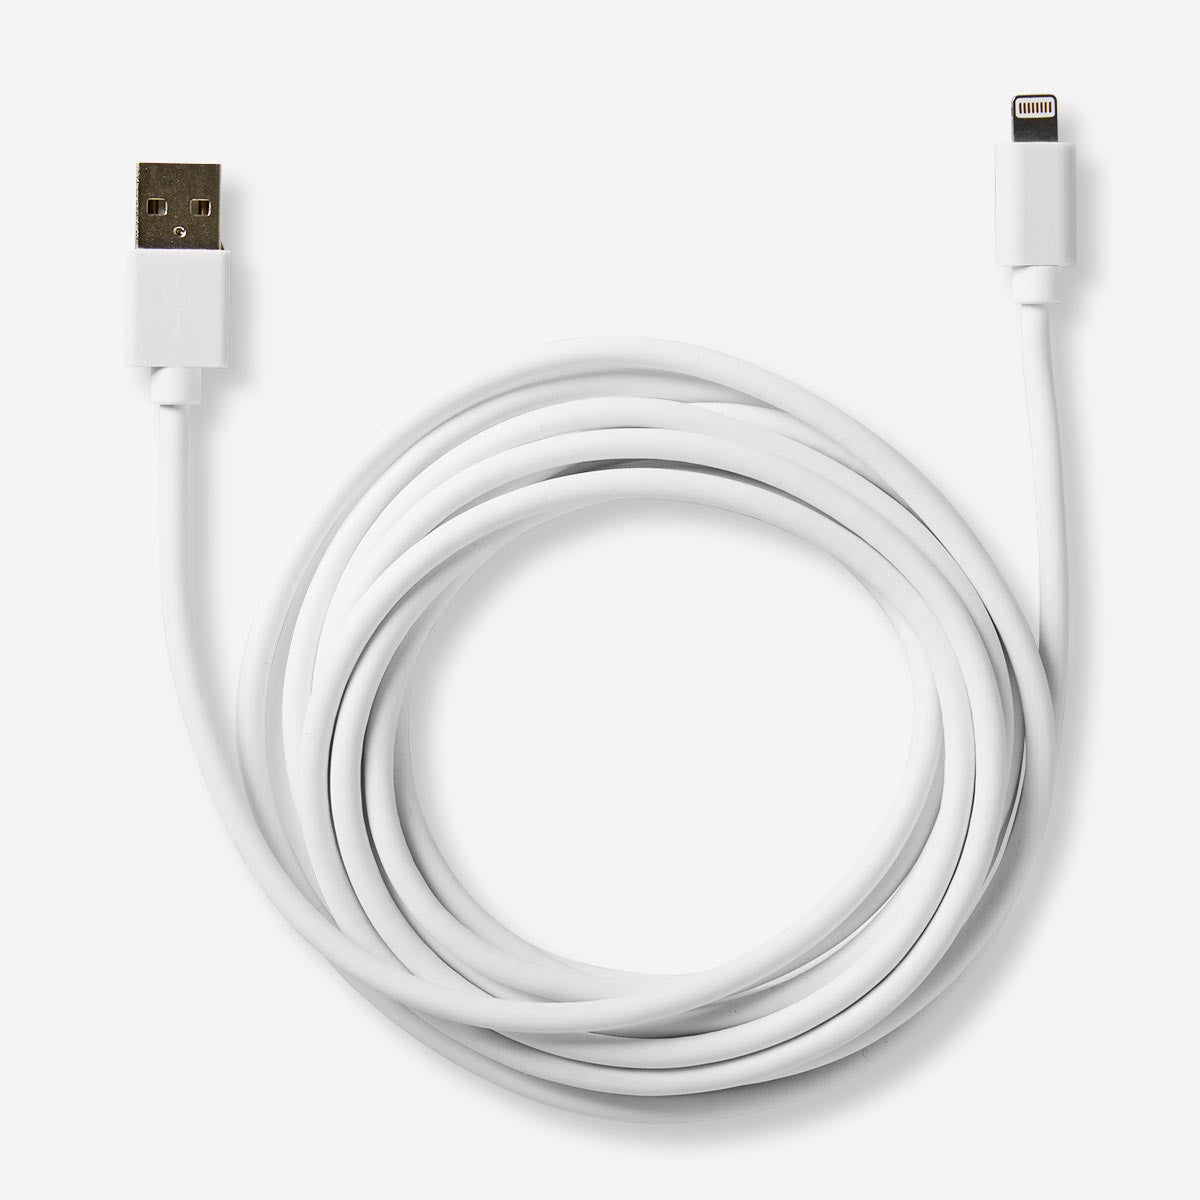 Charging cable. Fits iPhones €6| Flying Tiger Copenhagen